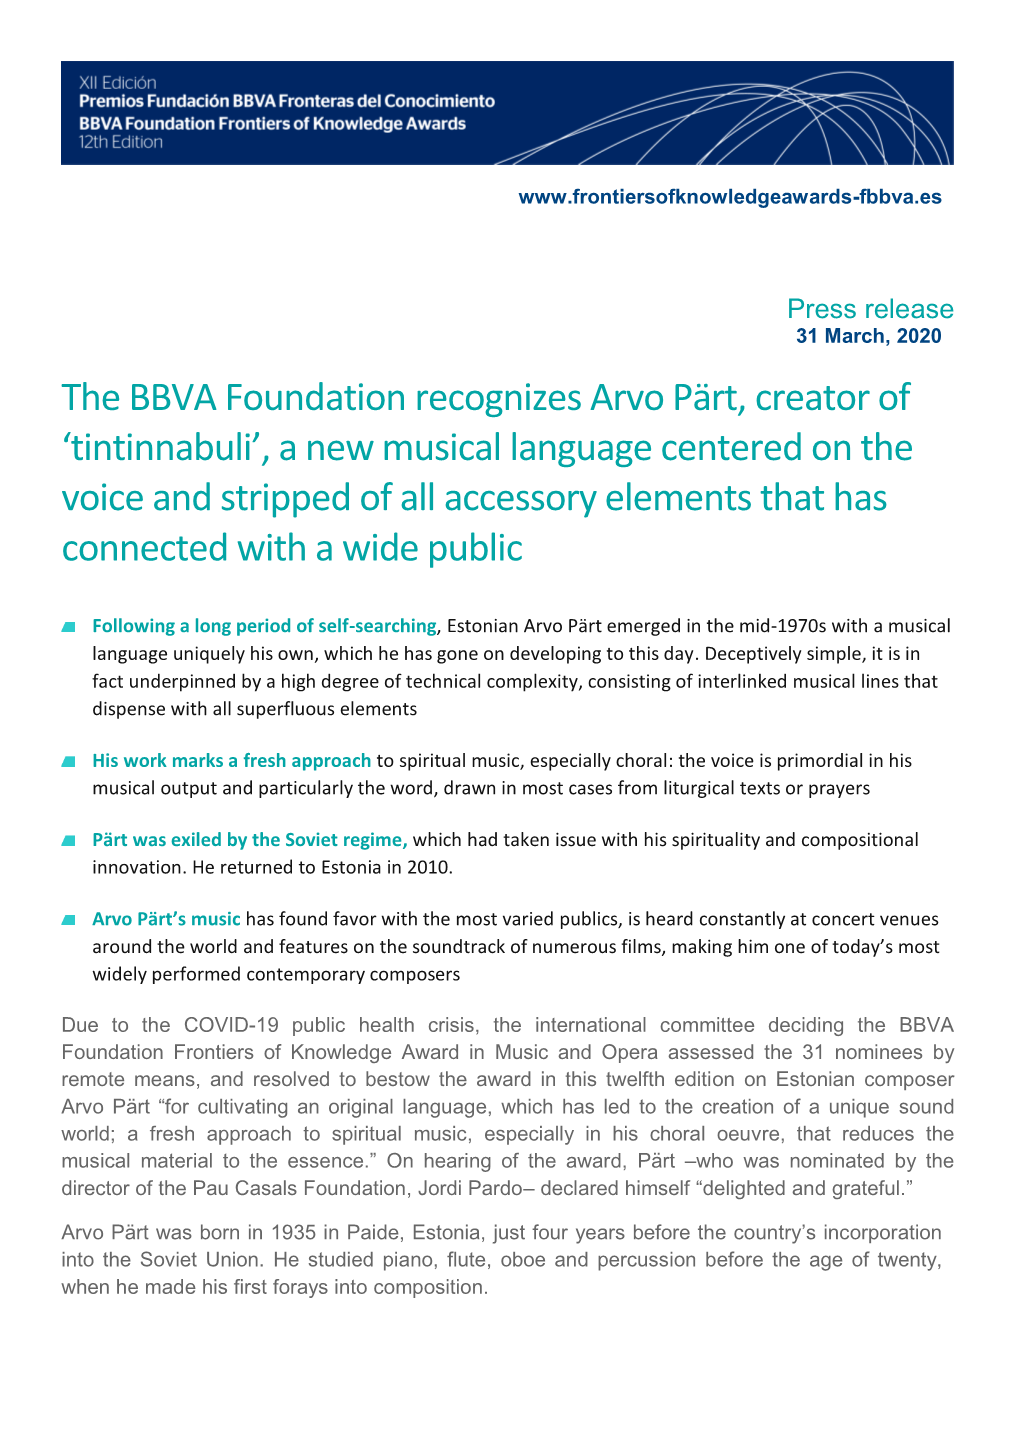 The BBVA Foundation Recognizes Arvo Pärt, Creator of 'Tintinnabuli', A